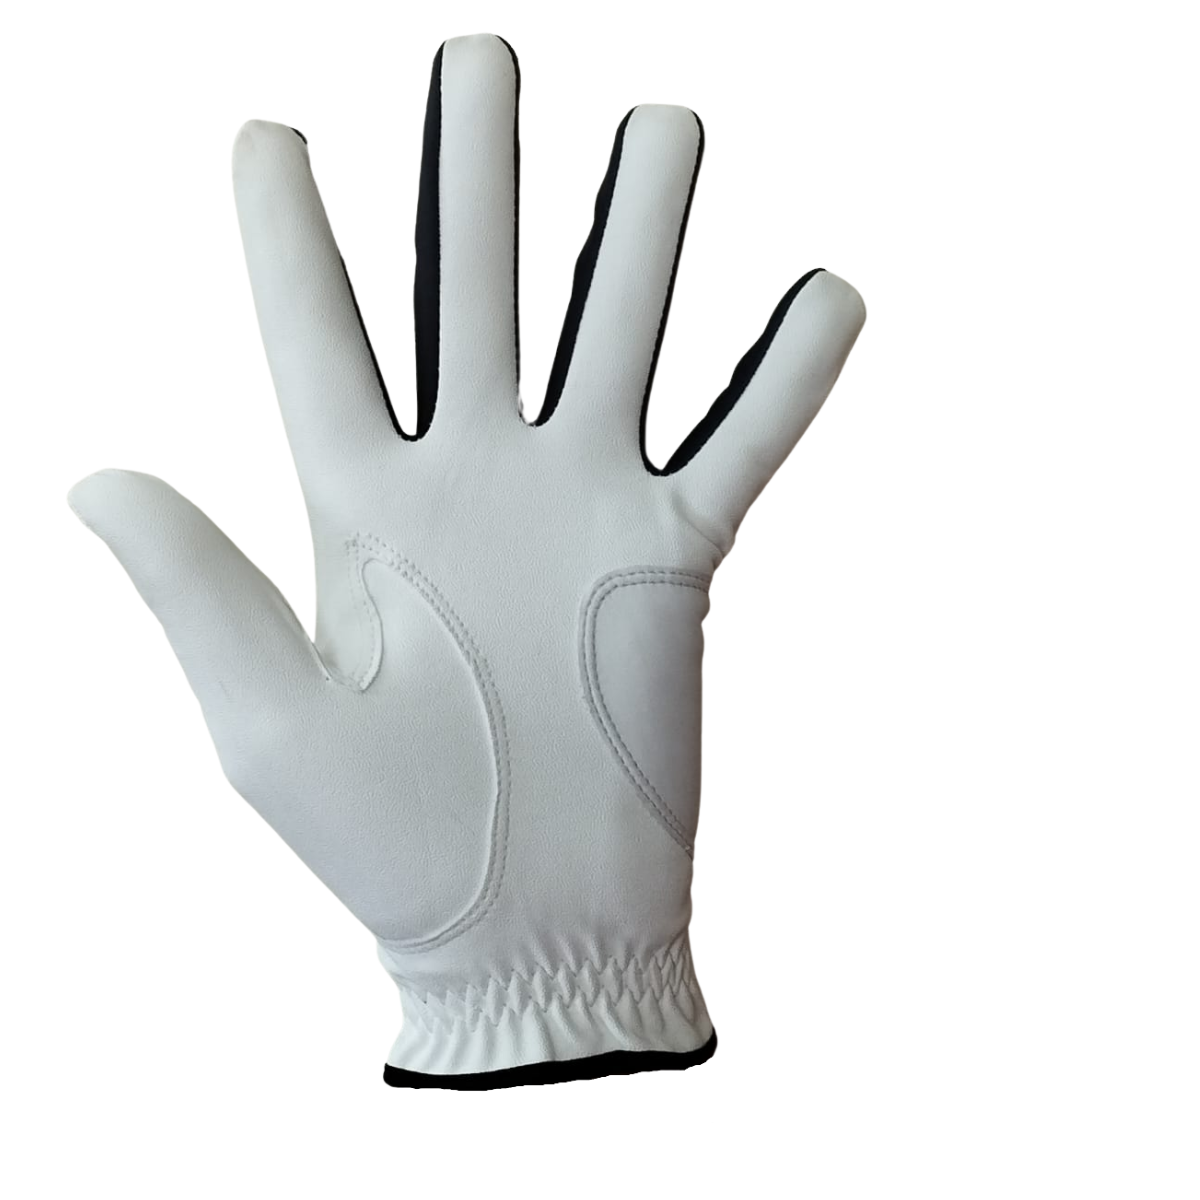 Premium Quality All Weather Golf Glove